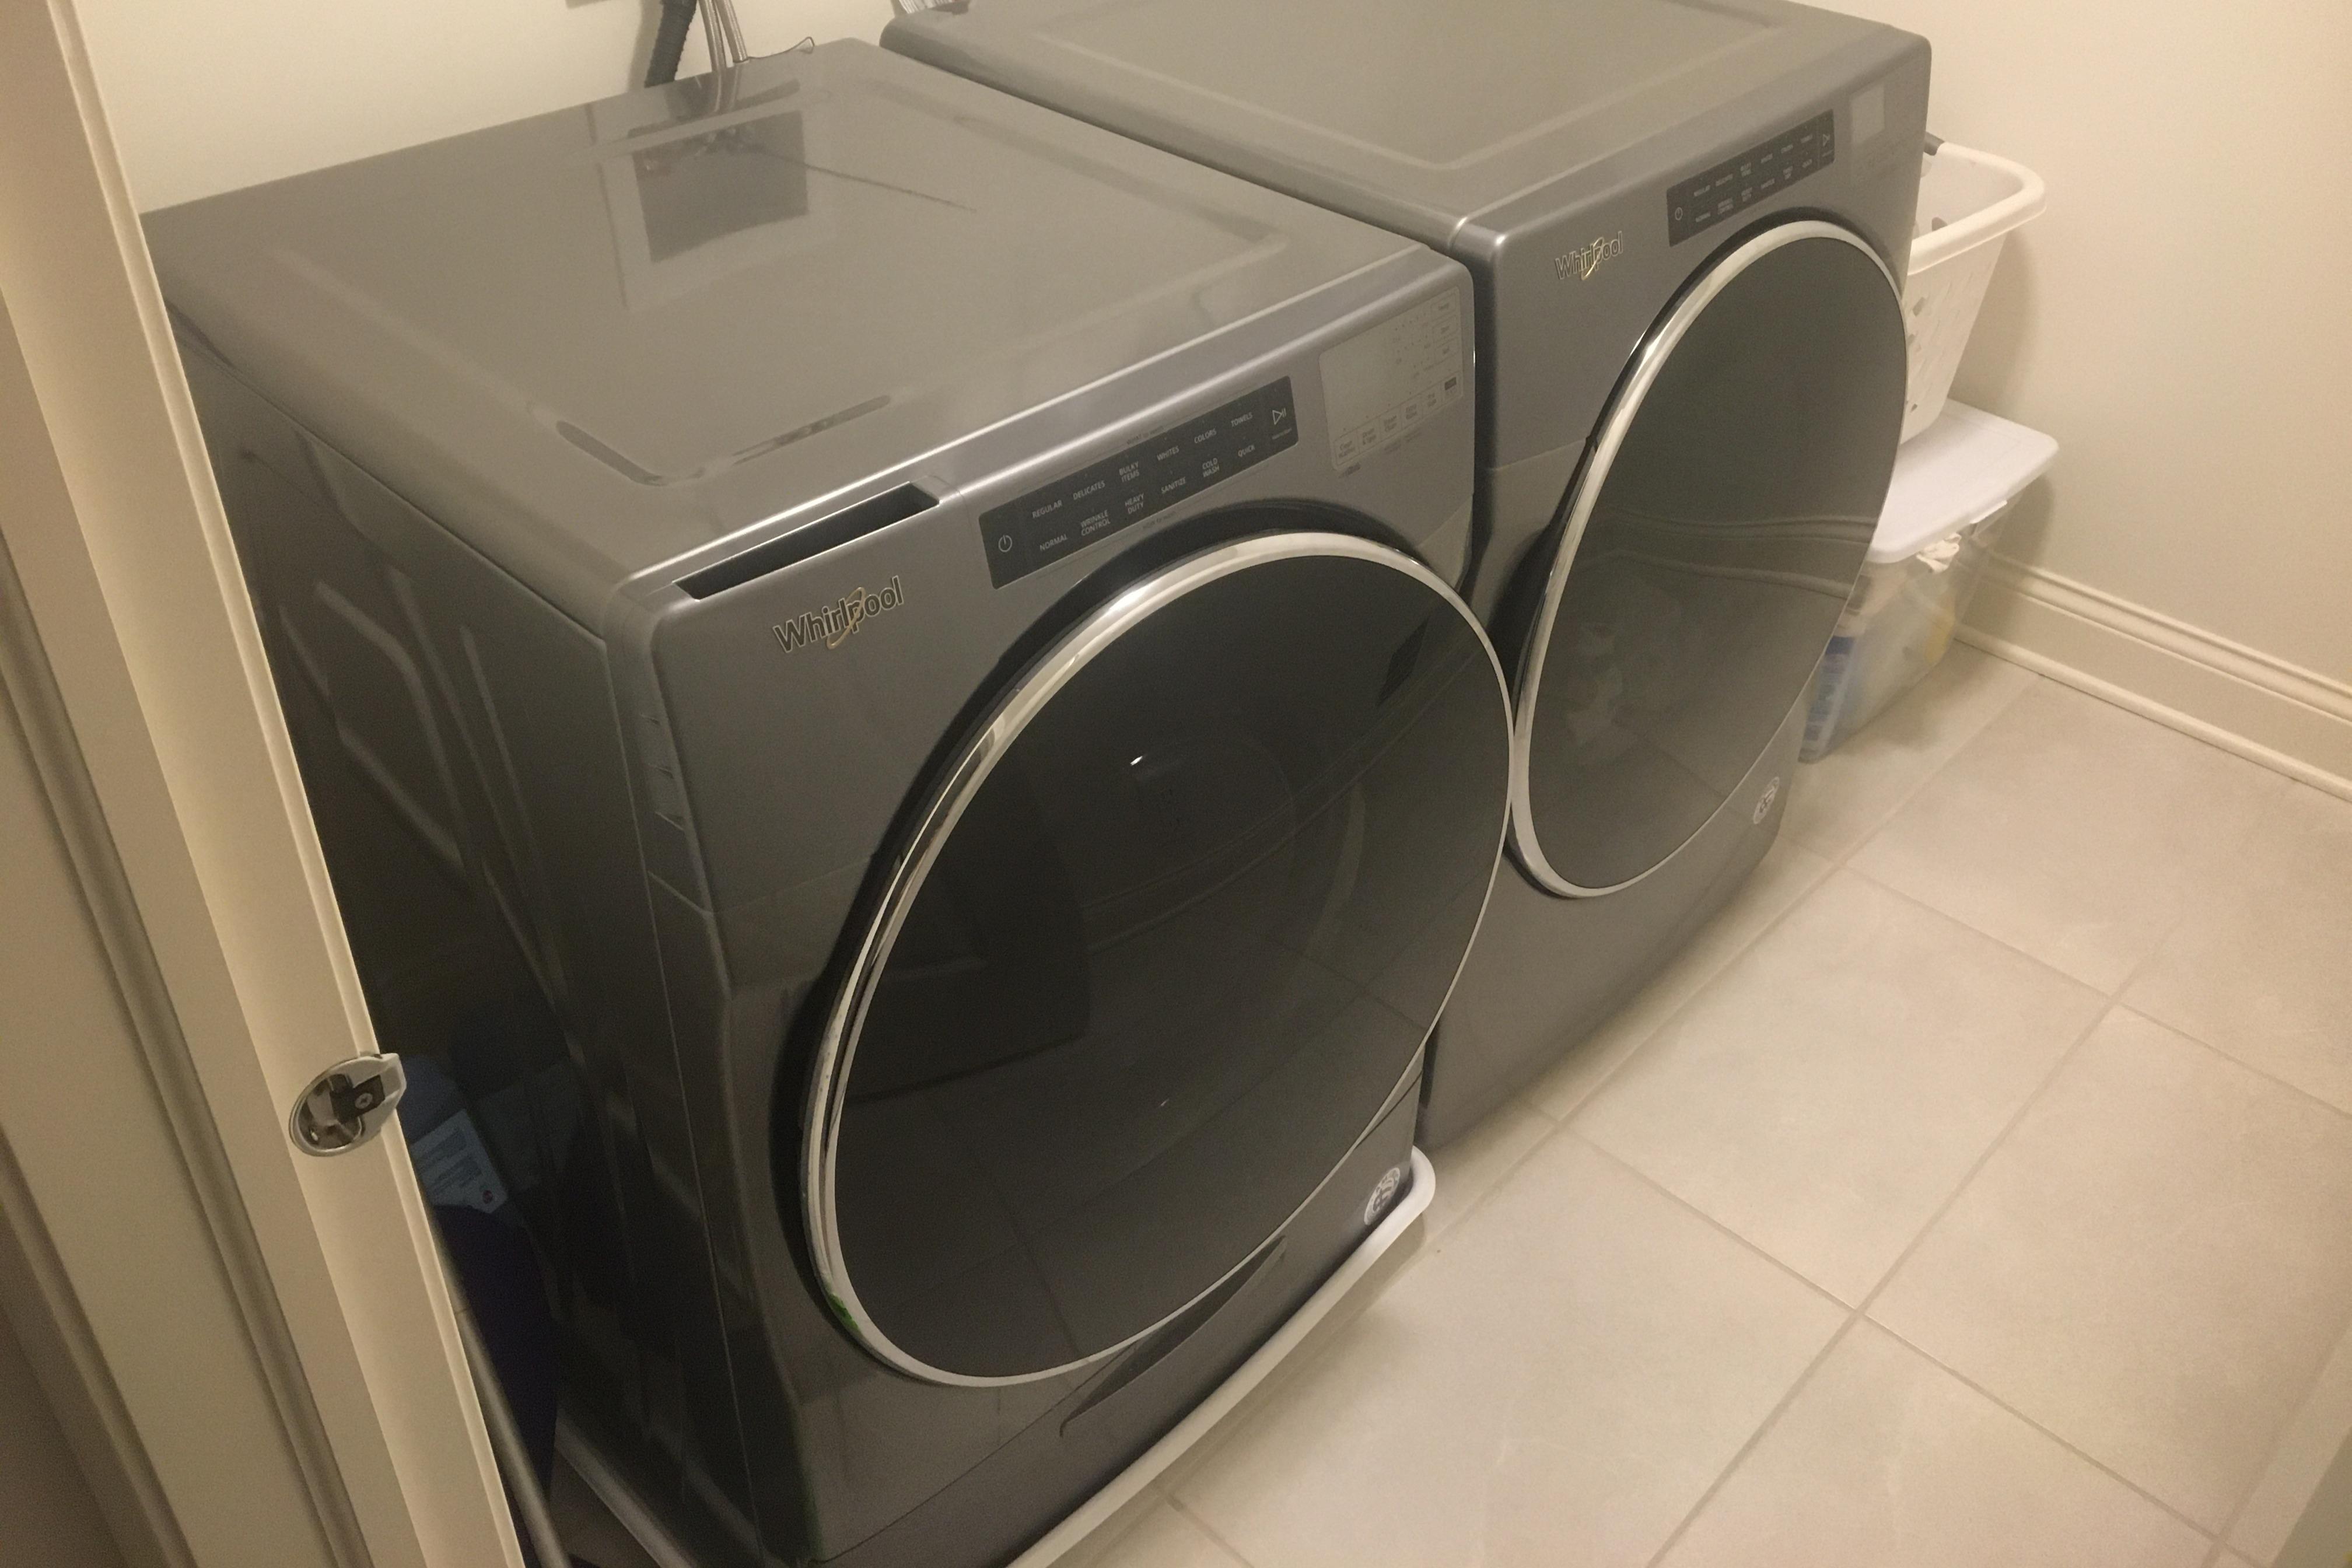 Washing Machine Repair Services